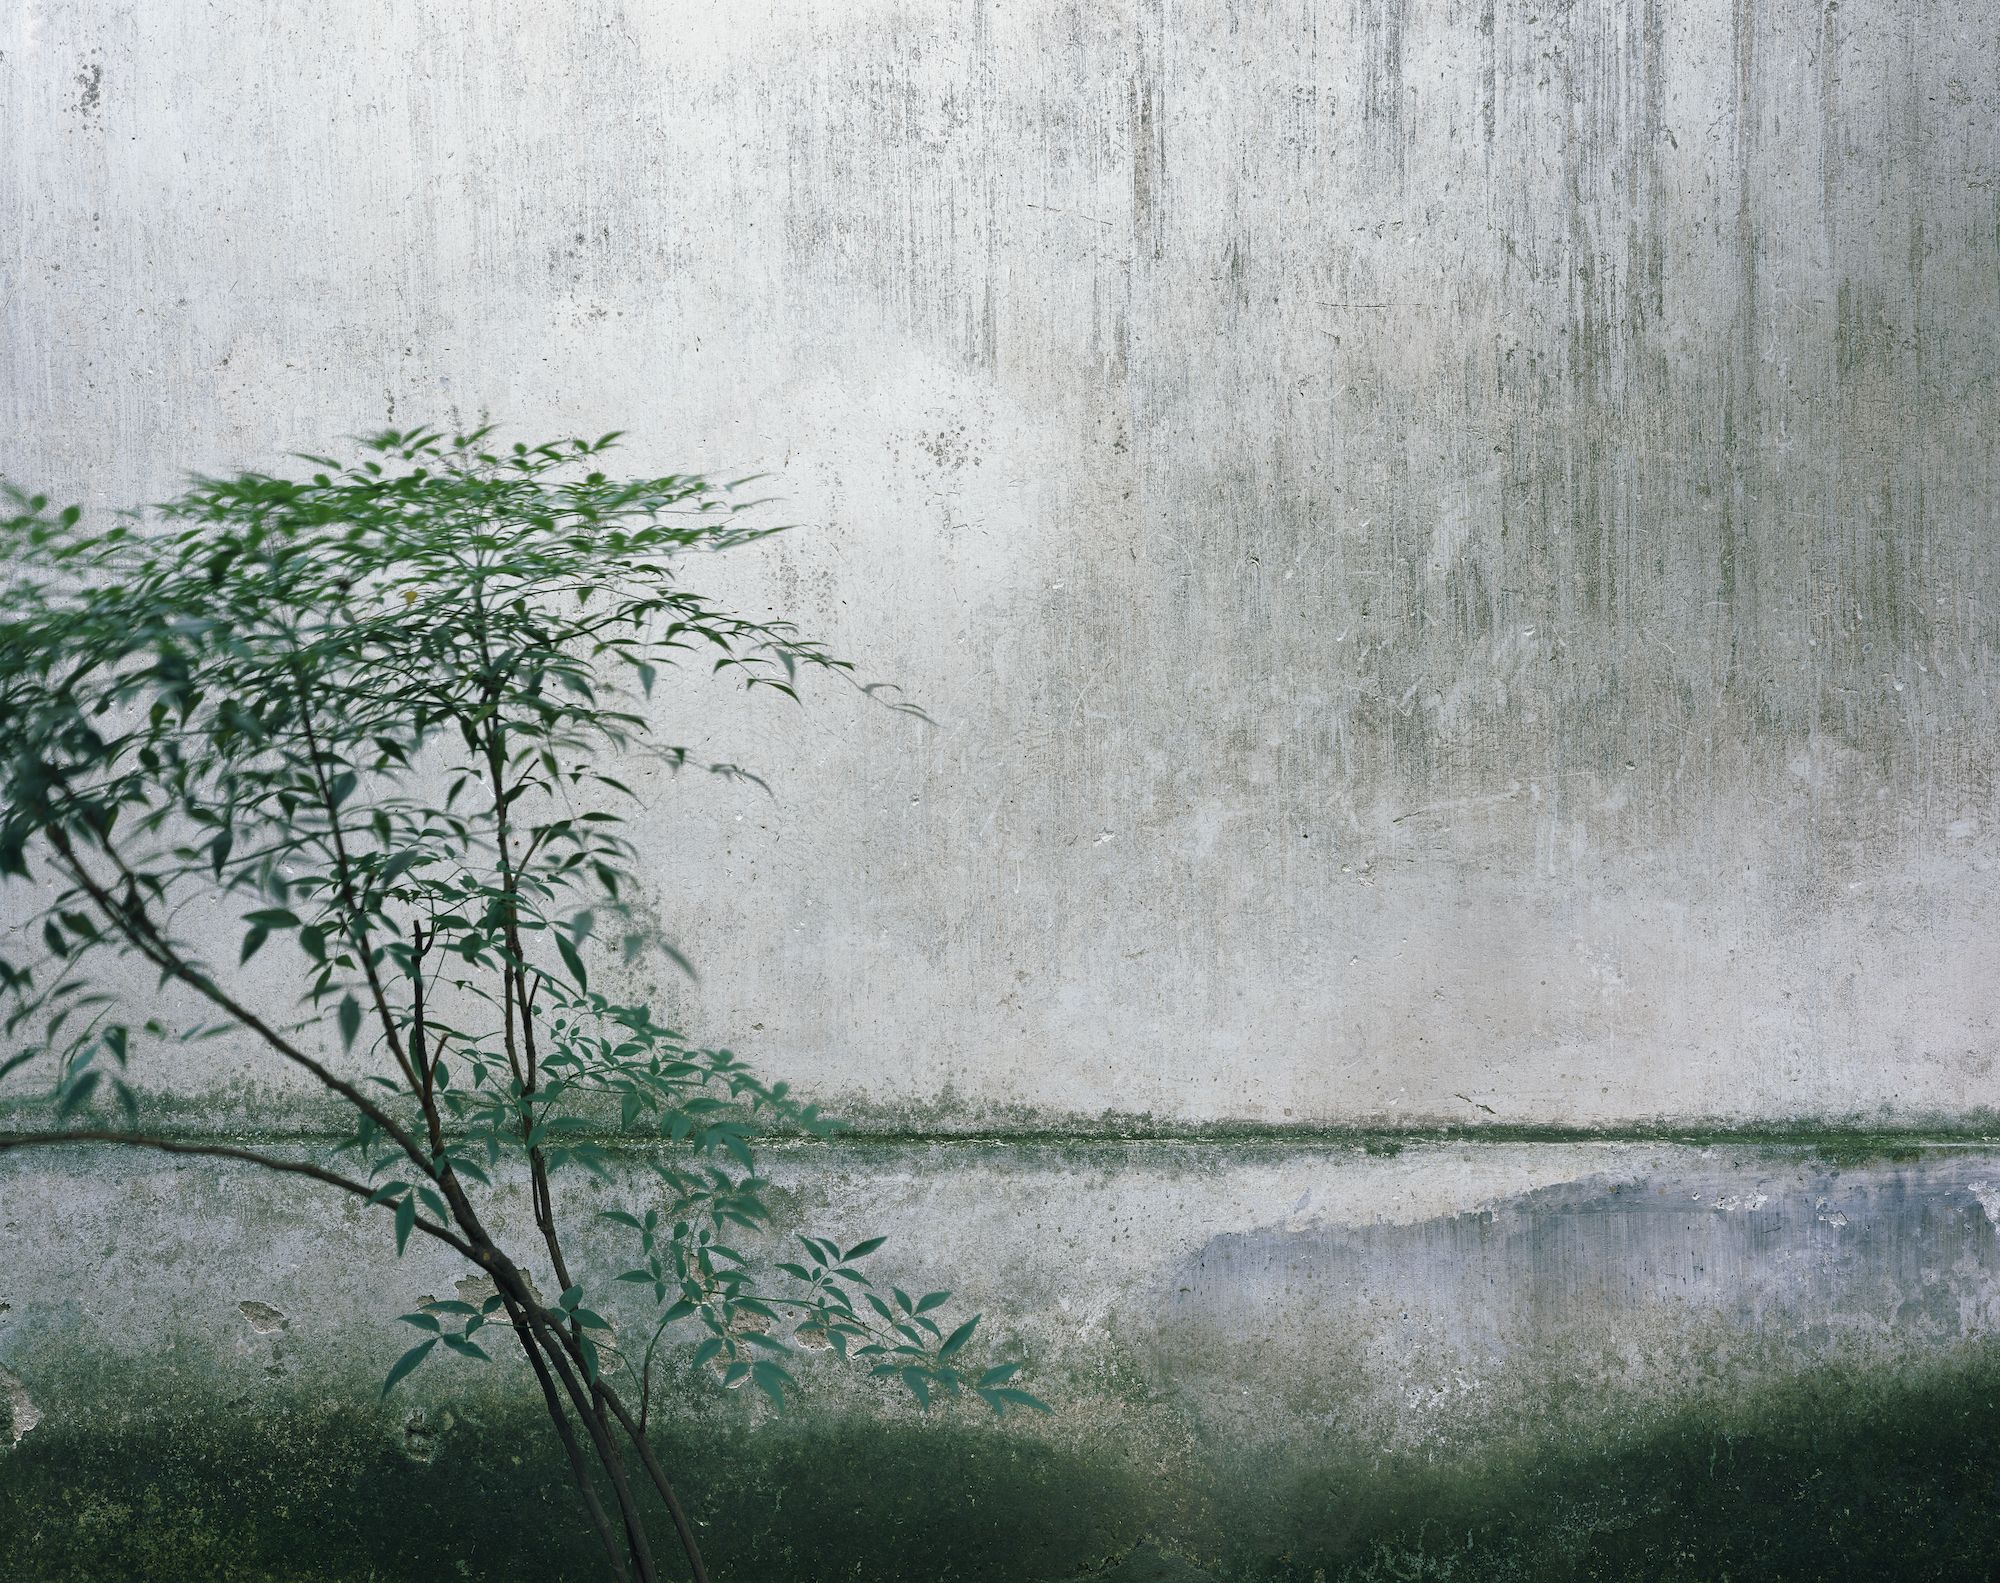 © Hélène Binet 'Lingering E' Suzhou Gardens courtesy ammann//gallery